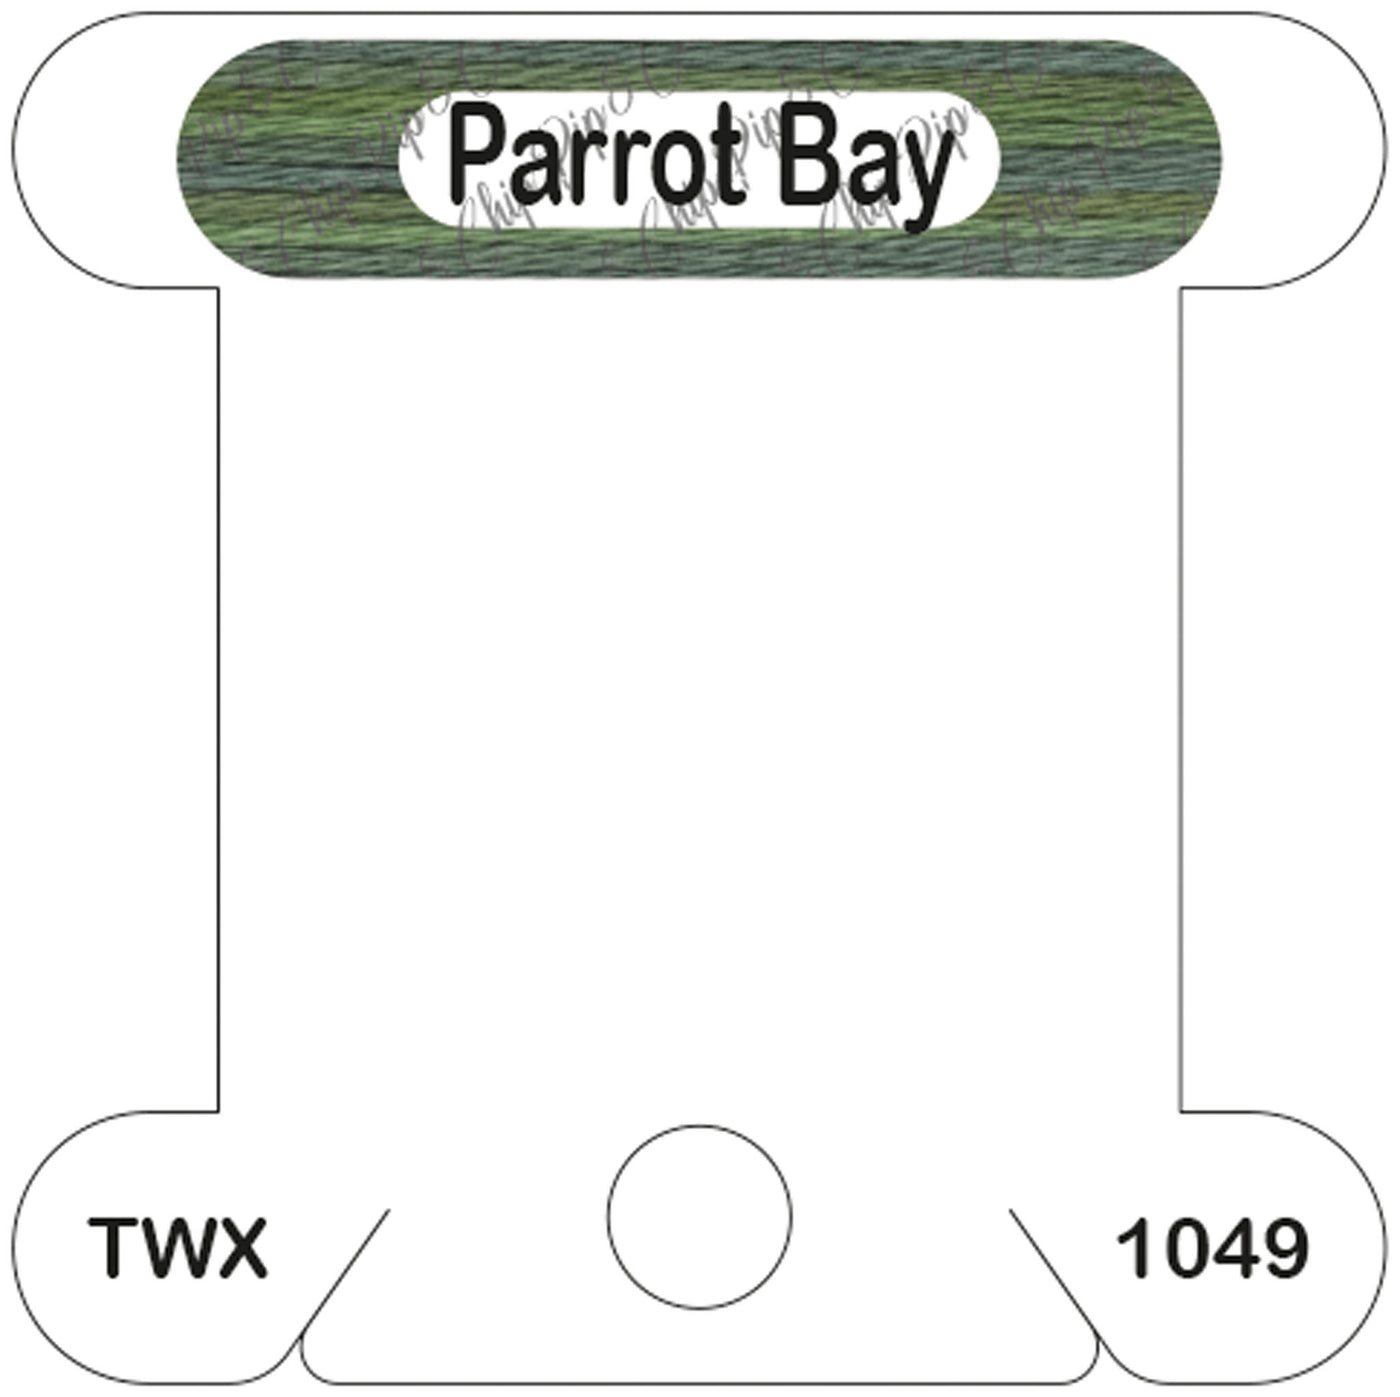 ThreadworX Parrot Bay acrylic bobbin